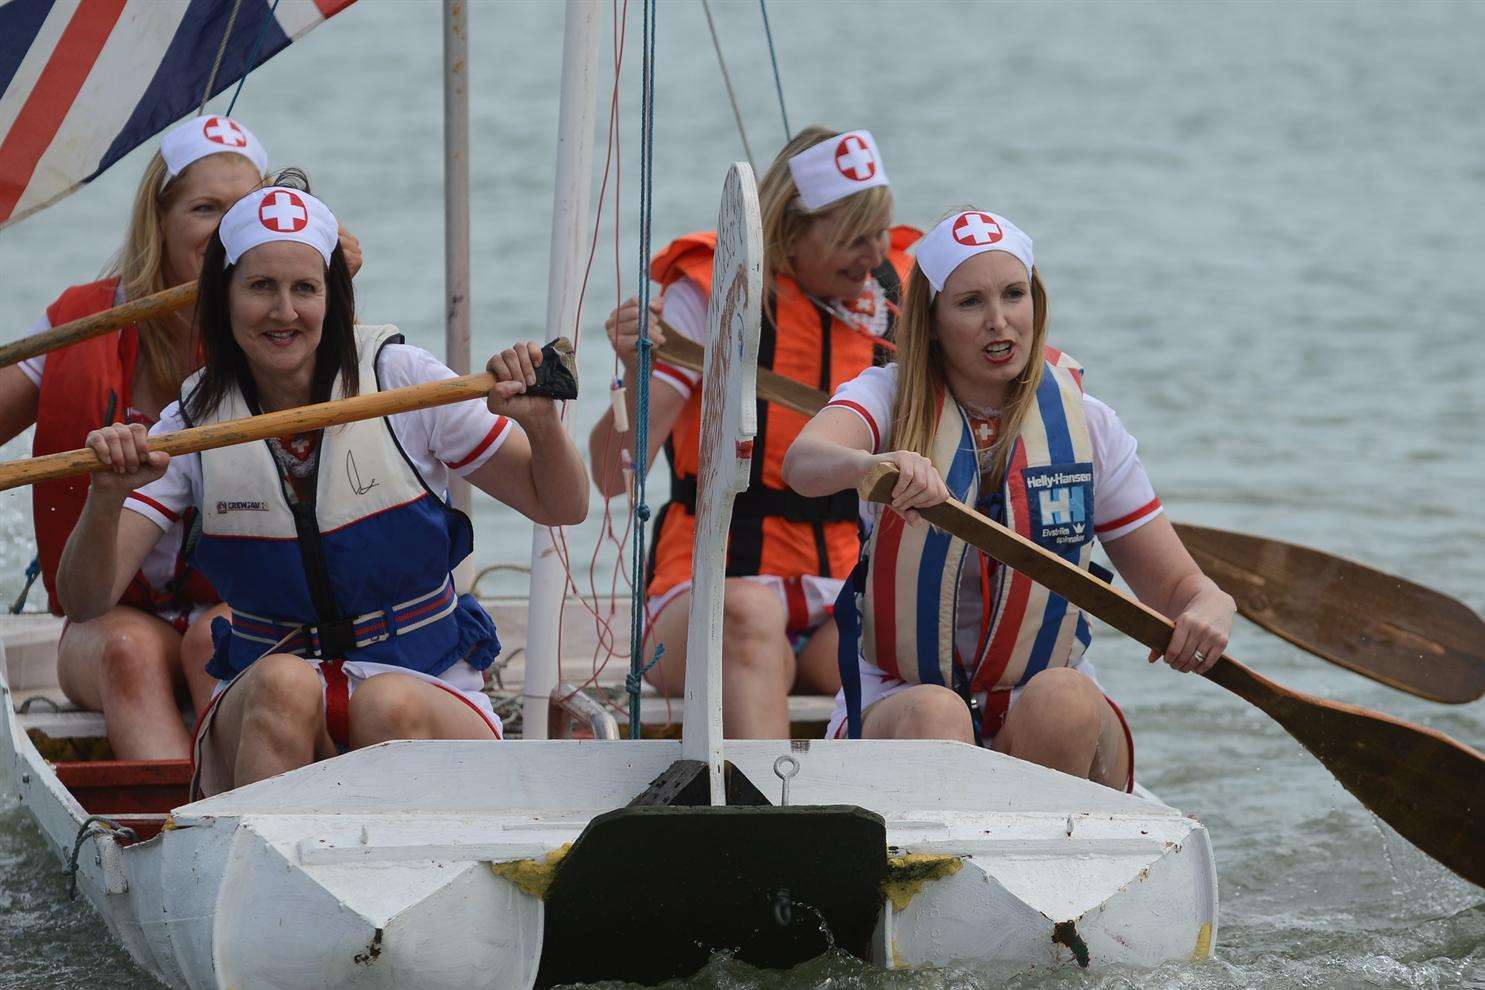 The Nautical Nurses team splash their way through the raft race